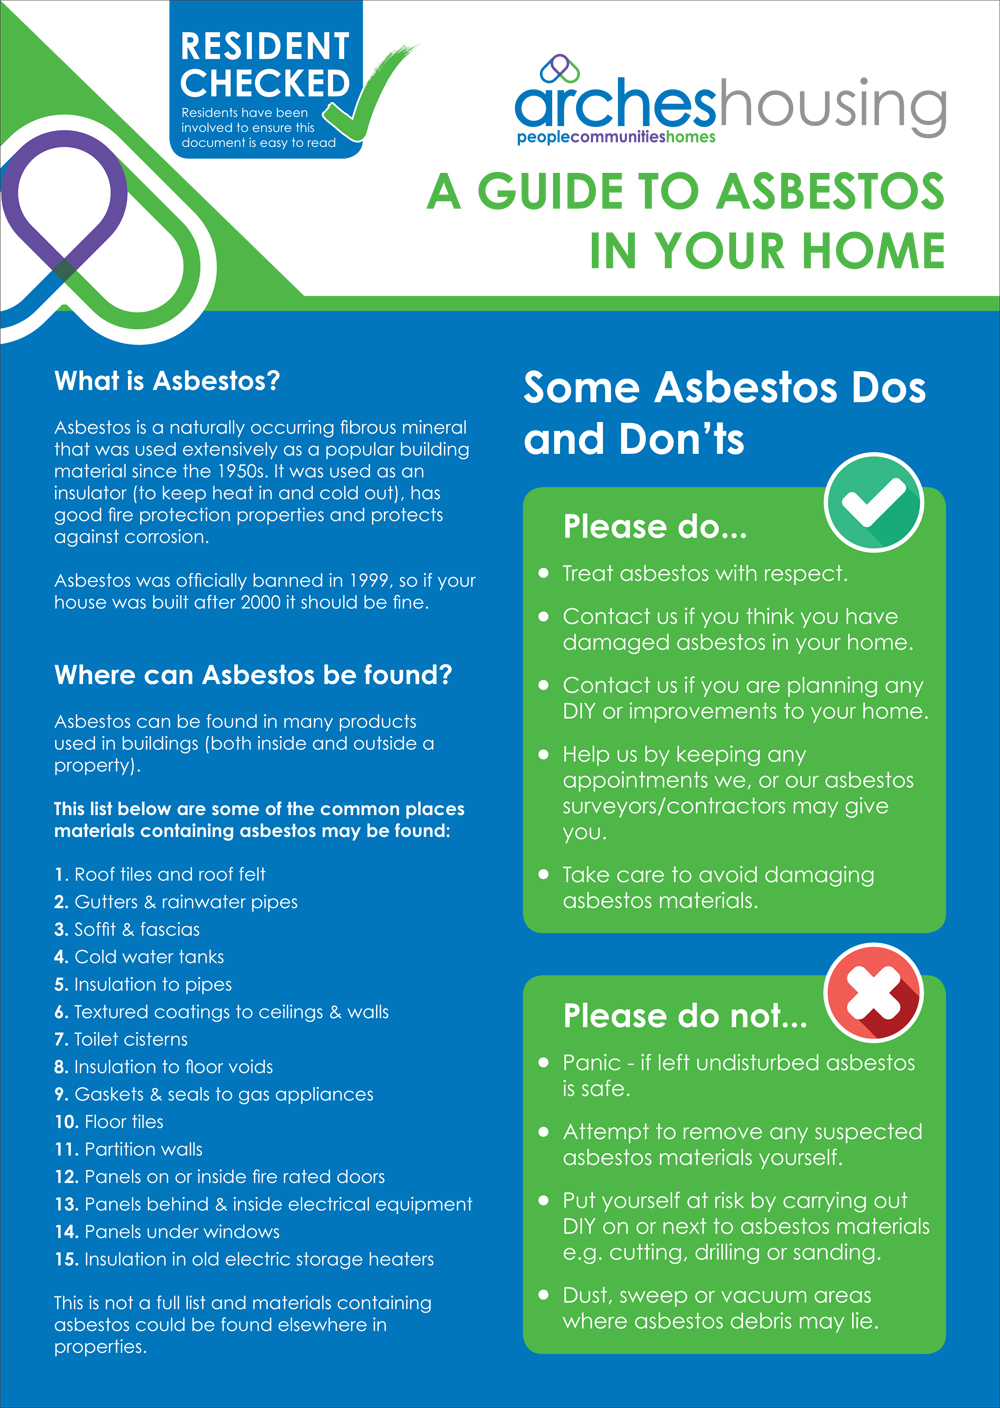 Asbestos guidance